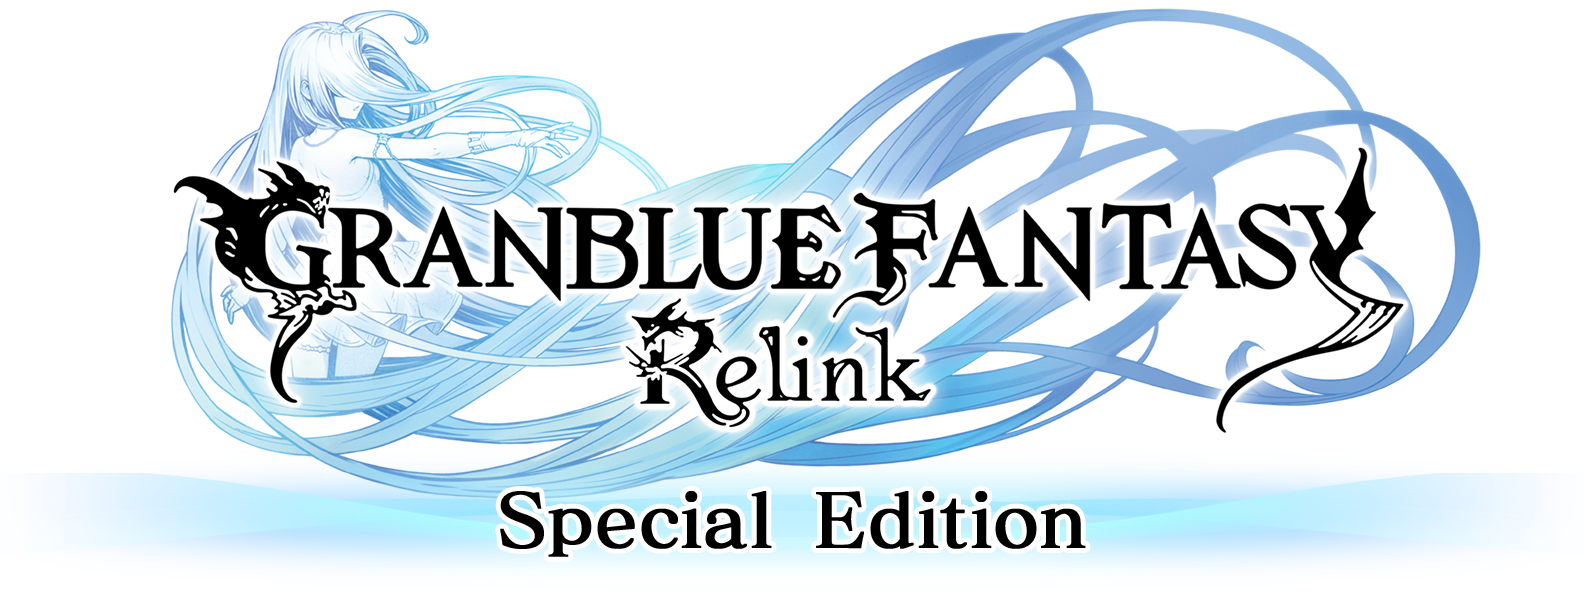 Granblue Fantasy: Relink, Sony Playstation 5